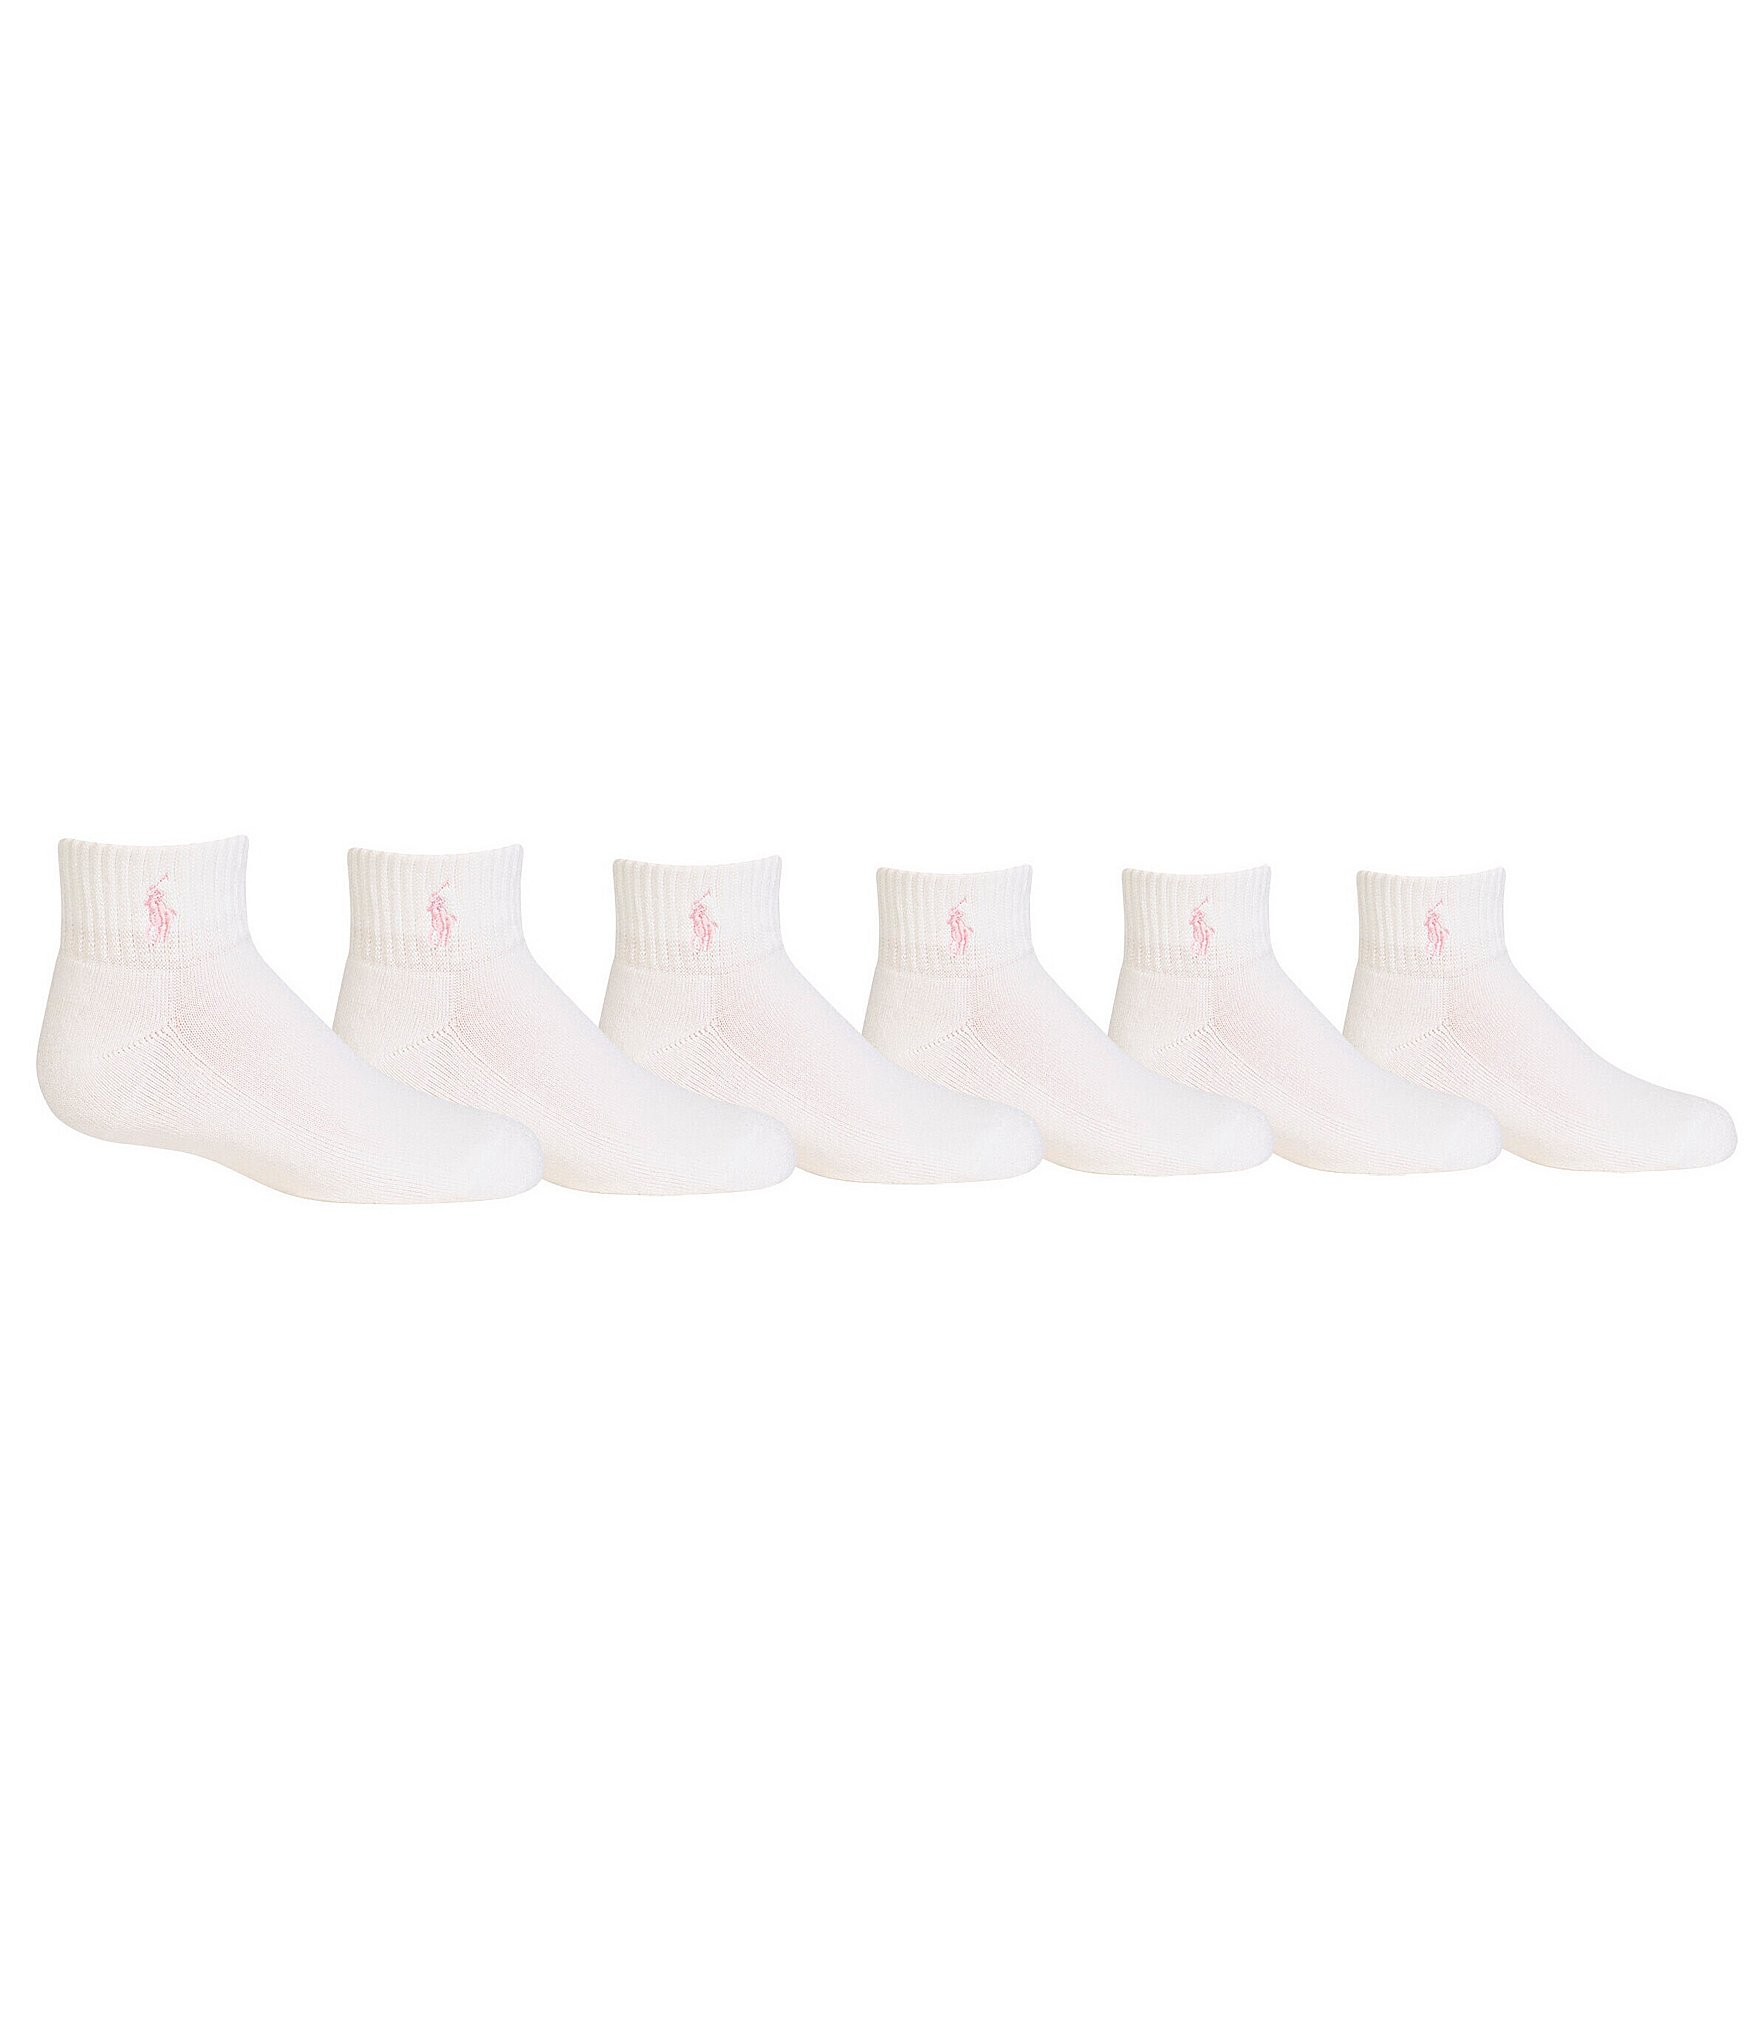 LAUREN Ralph Lauren 6-Pack Flat Knit Ultra Low Cut Socks White Assorted  9-11 (US Women's size 4-10.5) at  Women's Clothing store